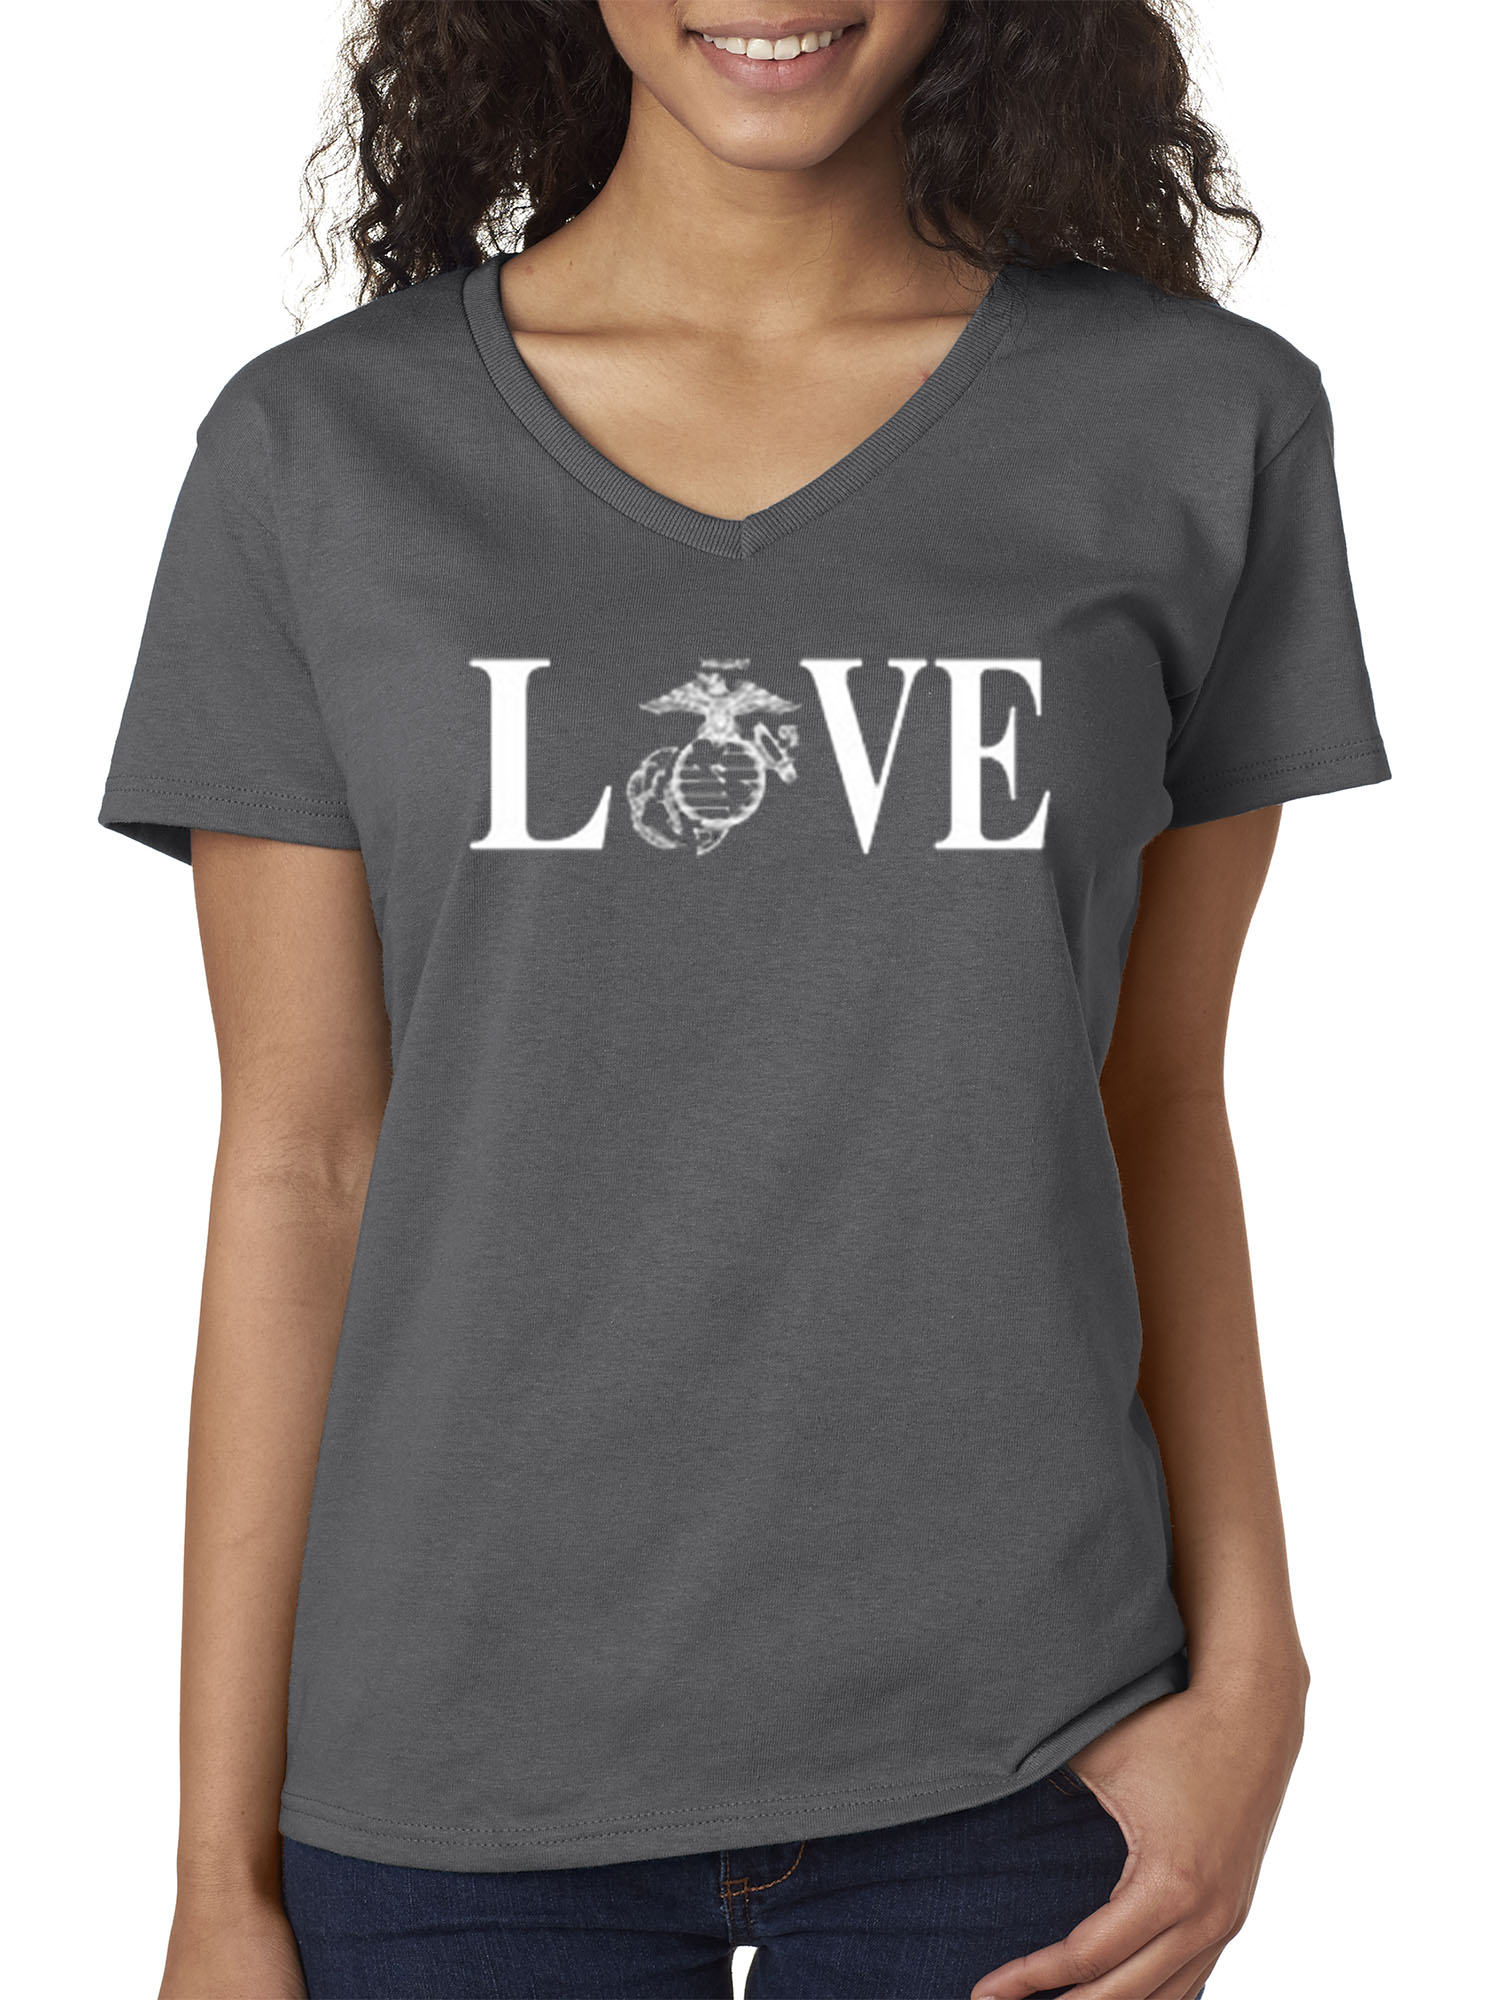 New Way 145 - Women's V-Neck T-Shirt Love Marines USMC Military USA XL Charcoal